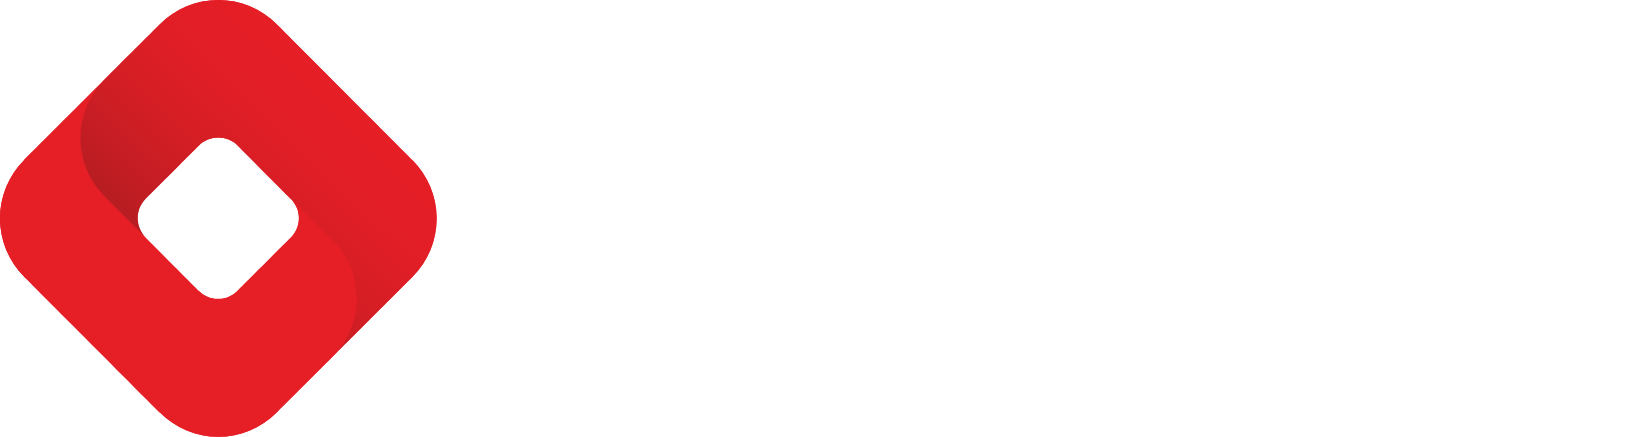 Pintec Technology logo large for dark backgrounds (transparent PNG)